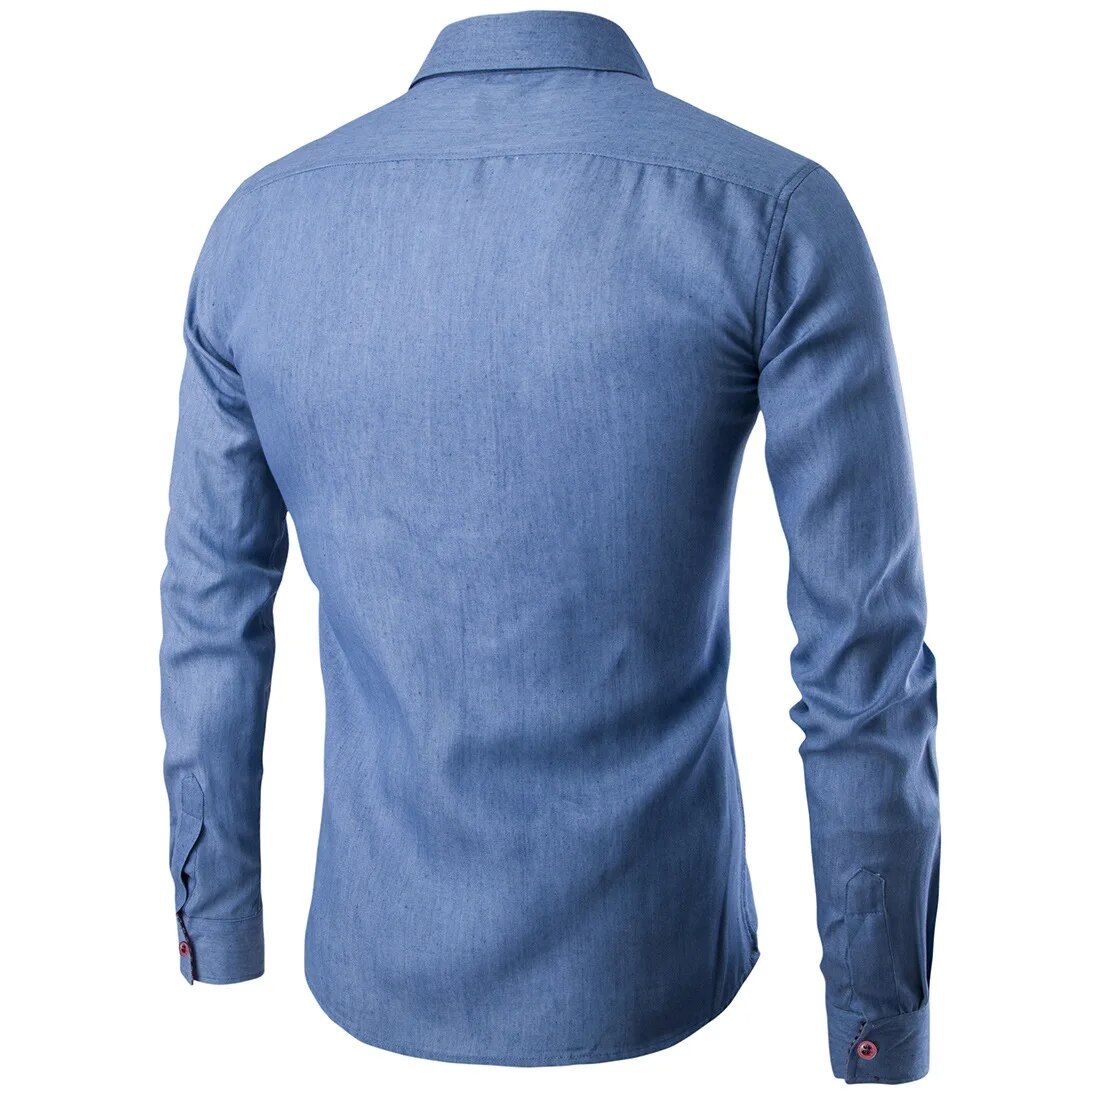 Men's solid color denim shirt featuring plaid cuffs